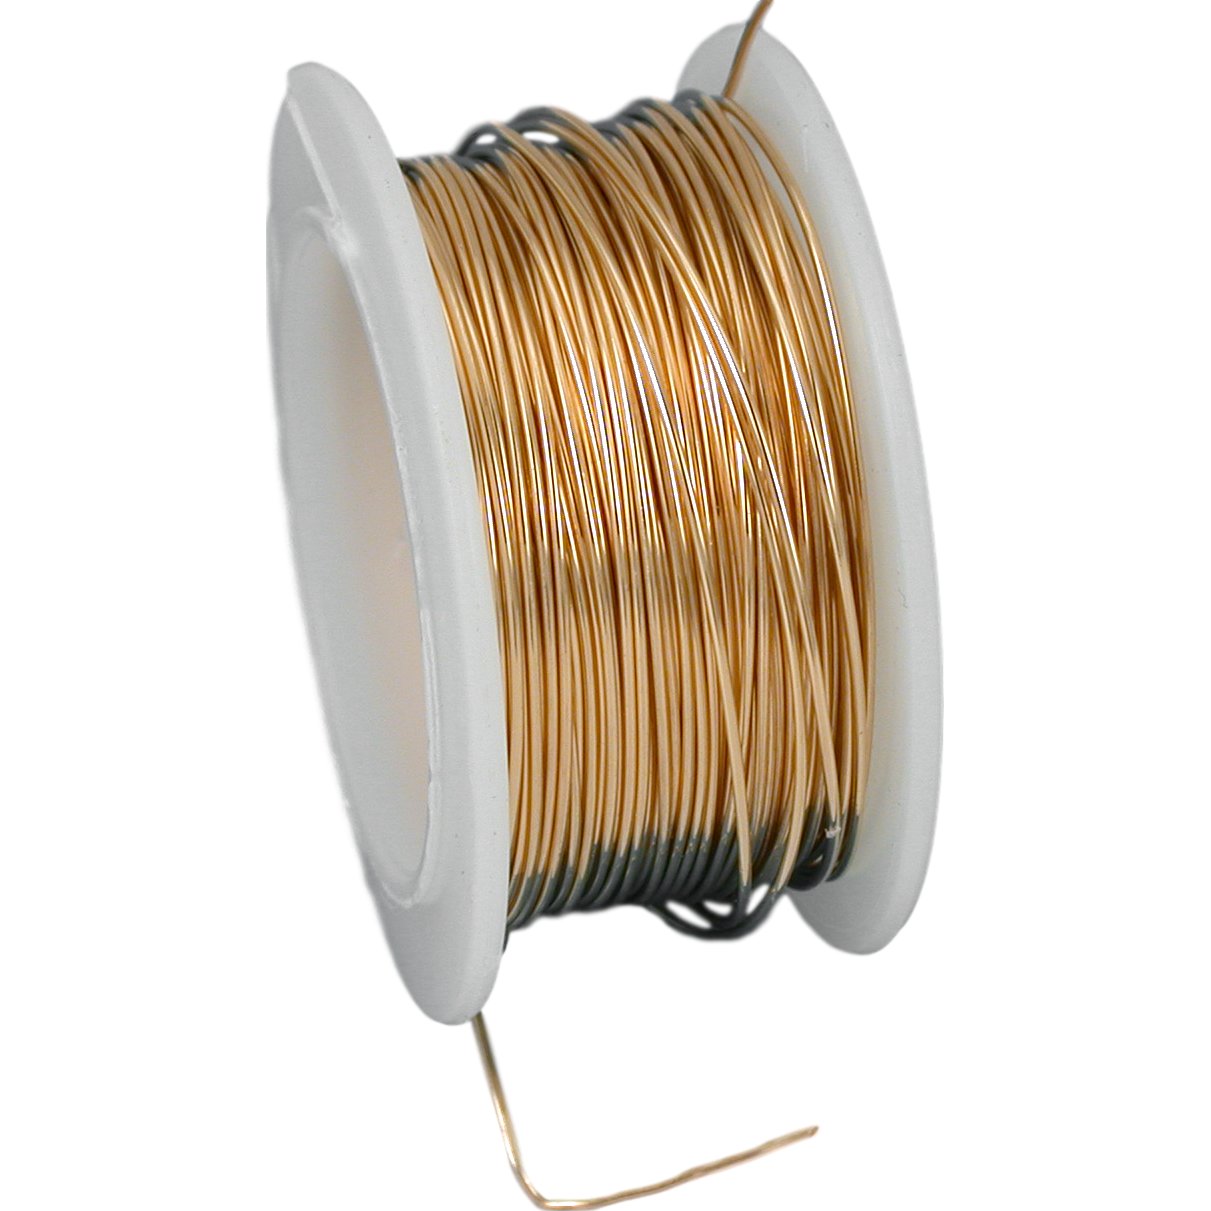 Artistic Wire Spool Gold Color 24 Gauge 9.1M